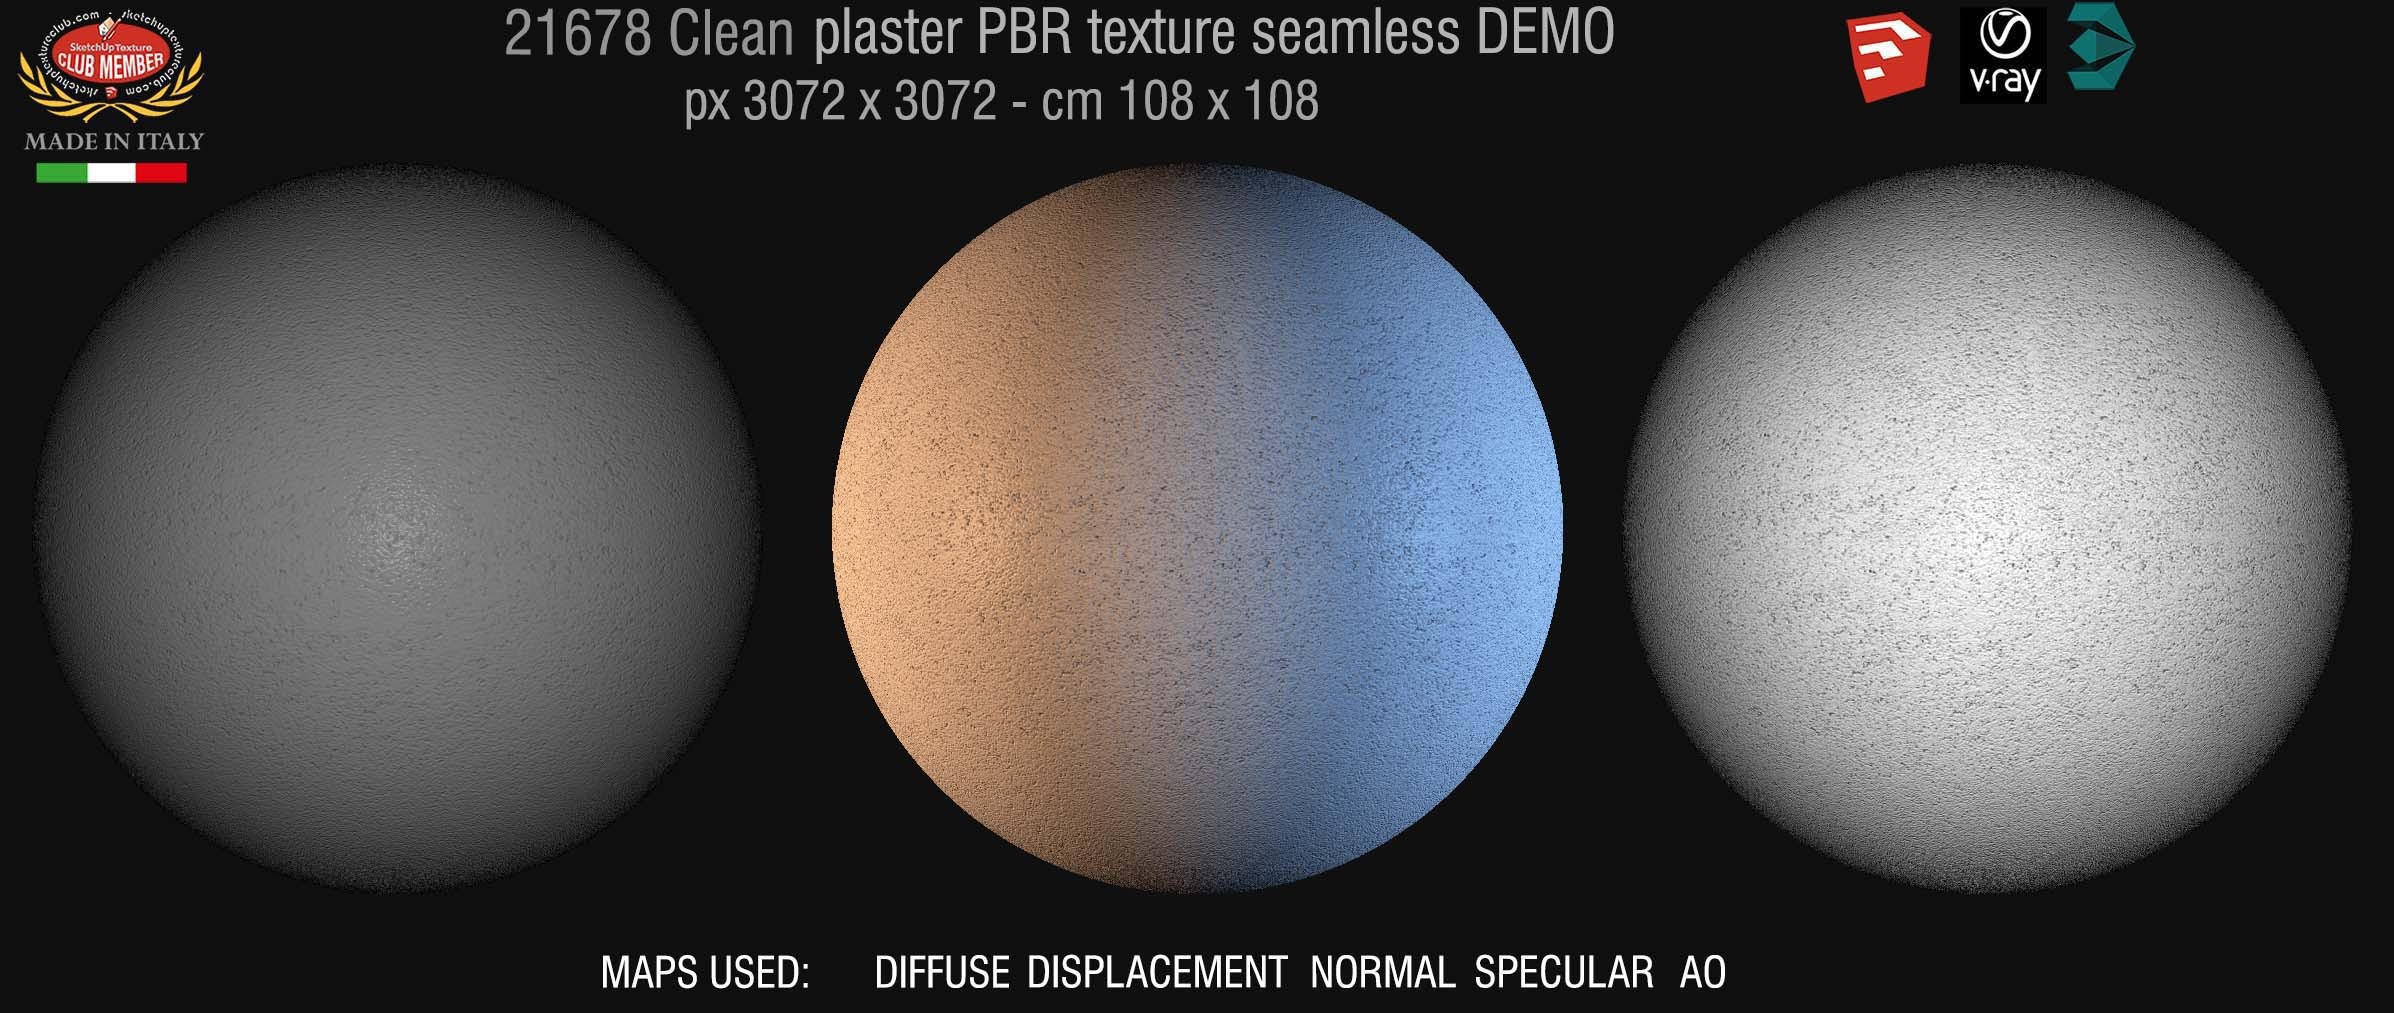 21678 clean plaster PBR texture seamless DEMO